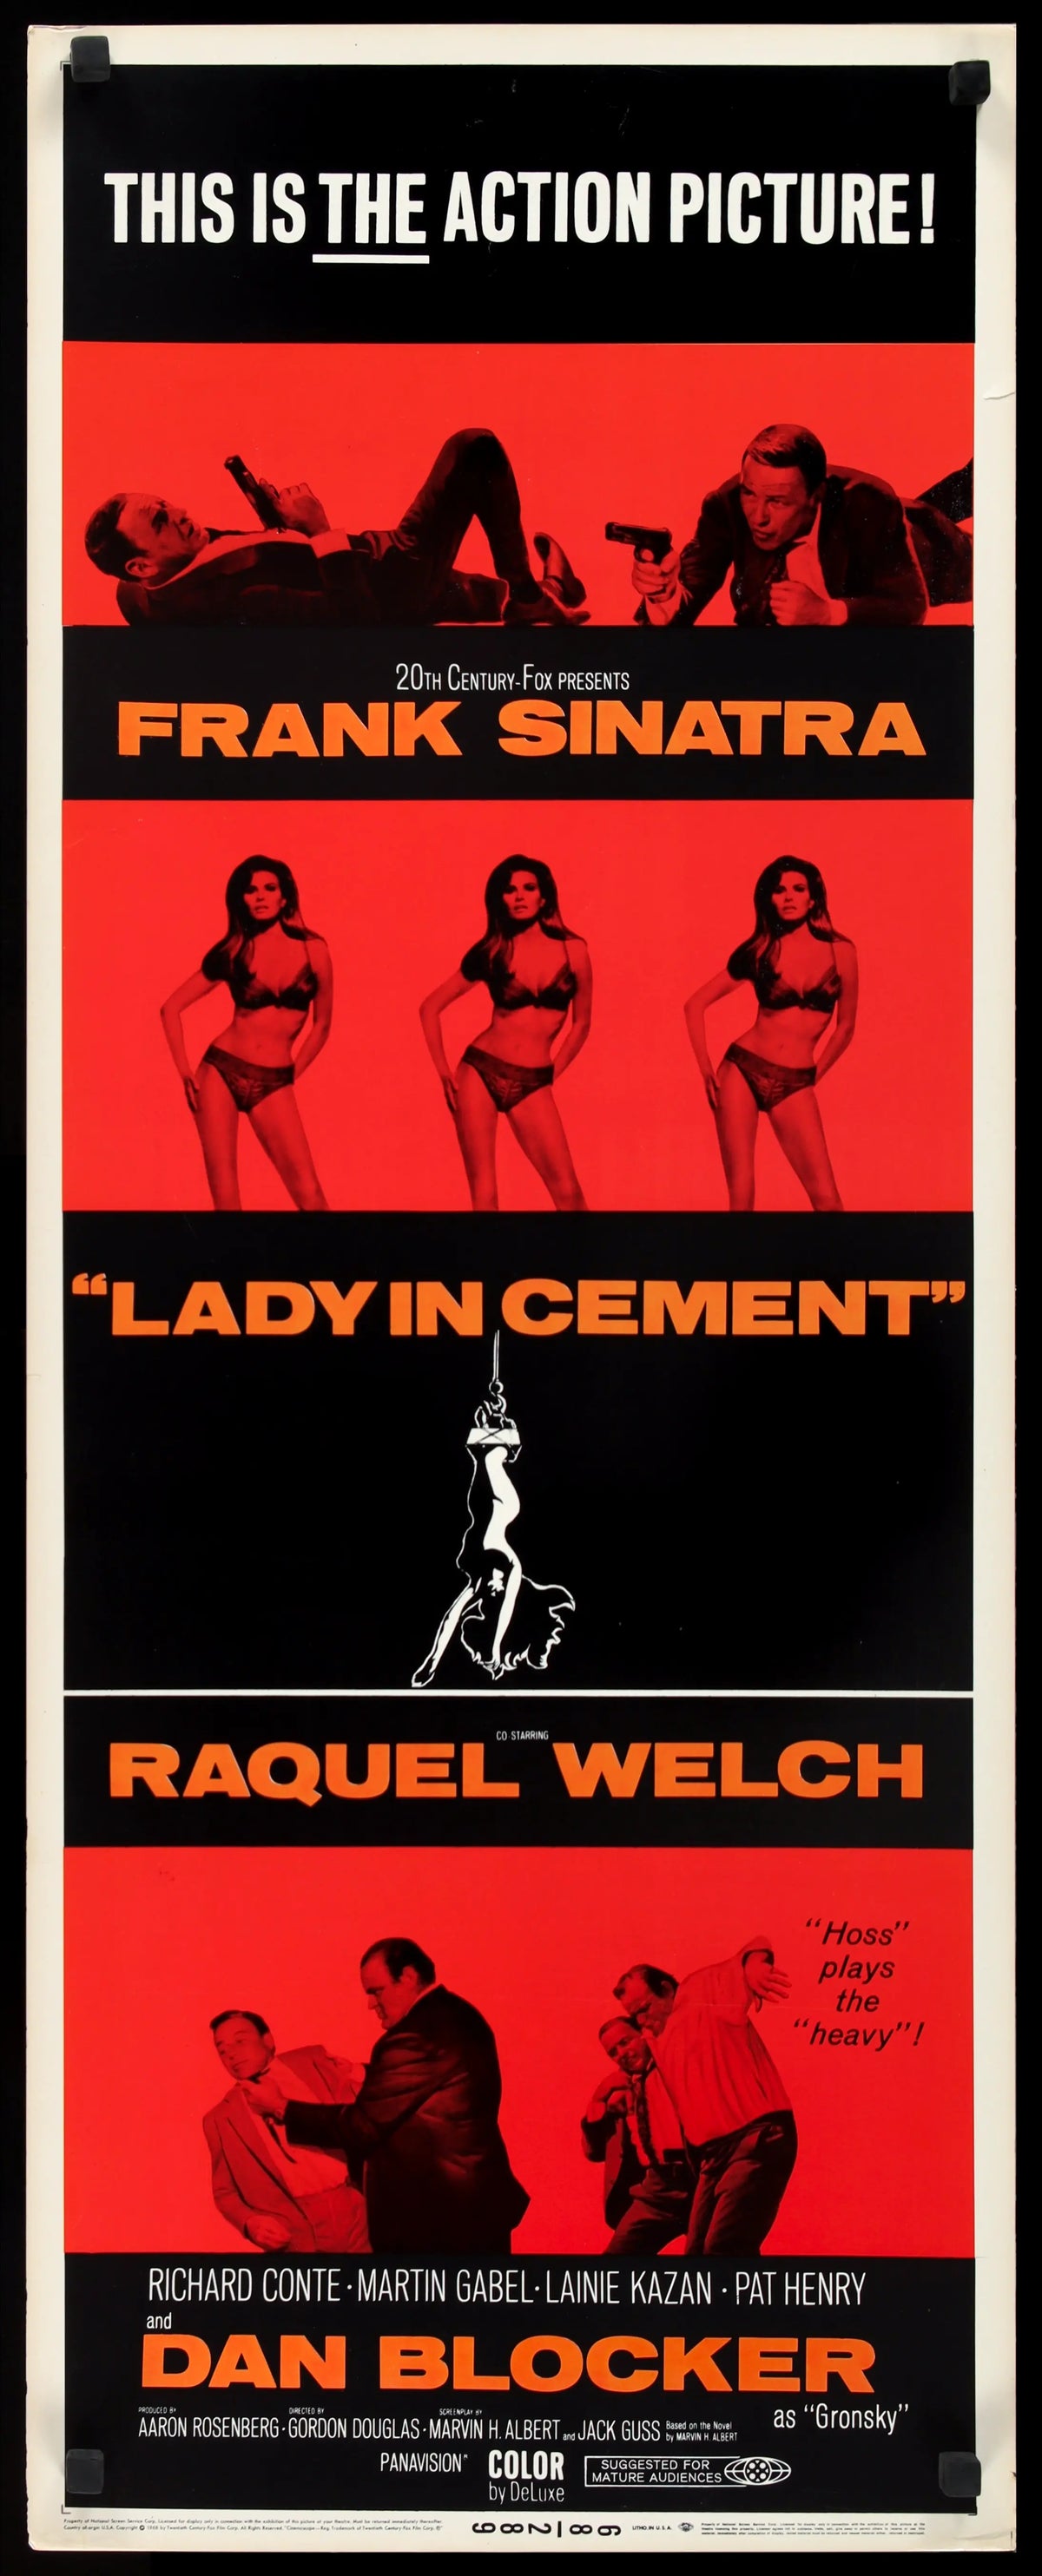 Lady in Cement (1968) original movie poster for sale at Original Film Art